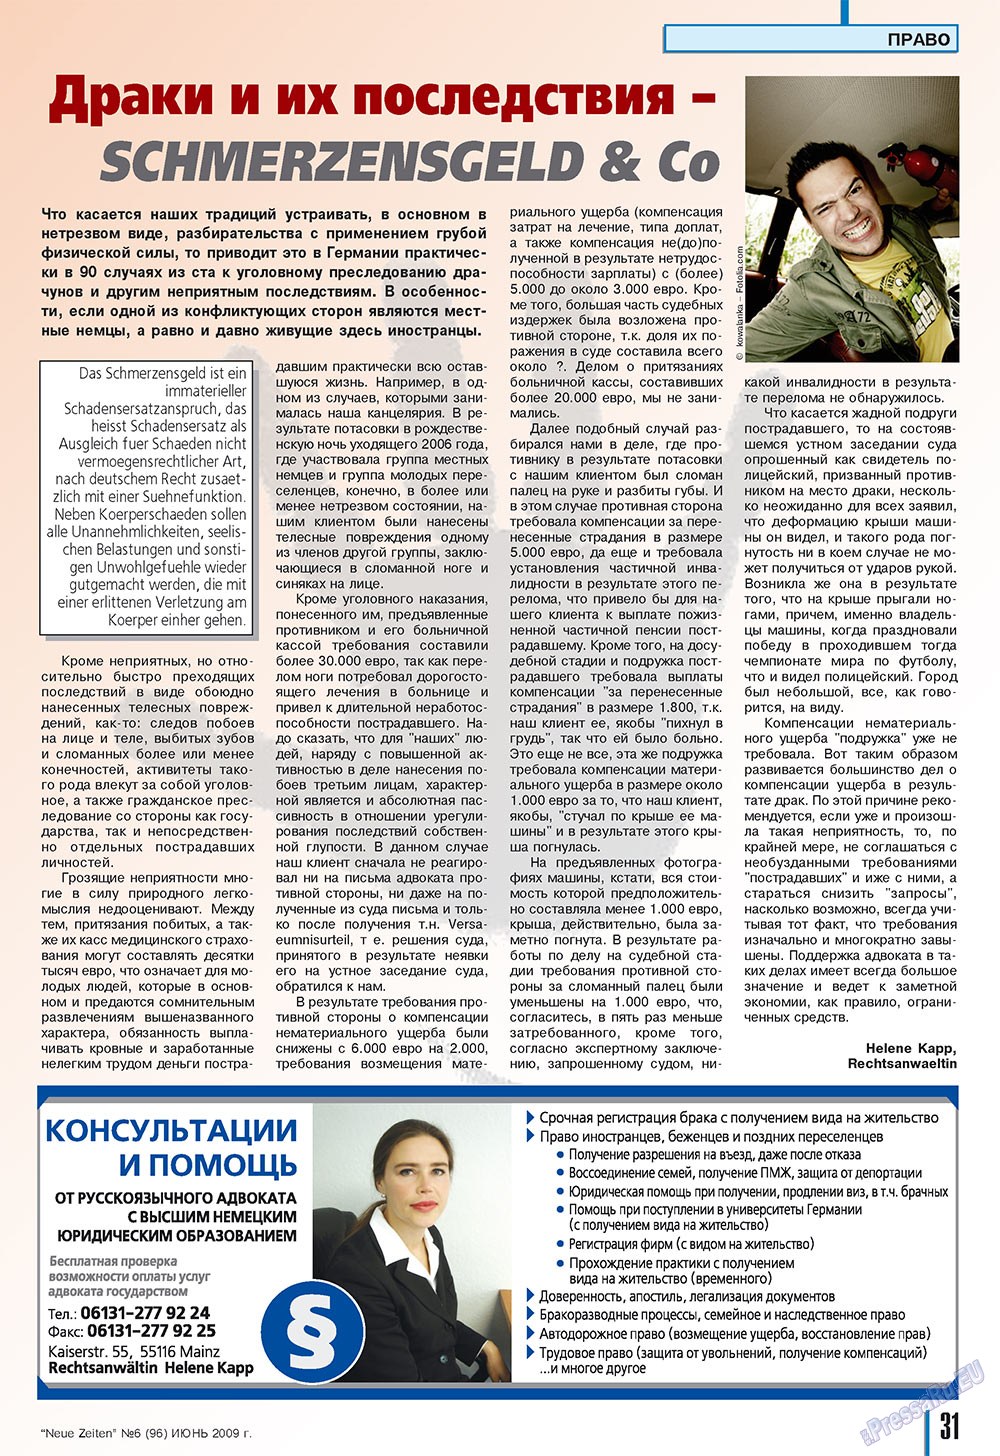 Neue Zeiten (журнал). 2009 год, номер 6, стр. 31